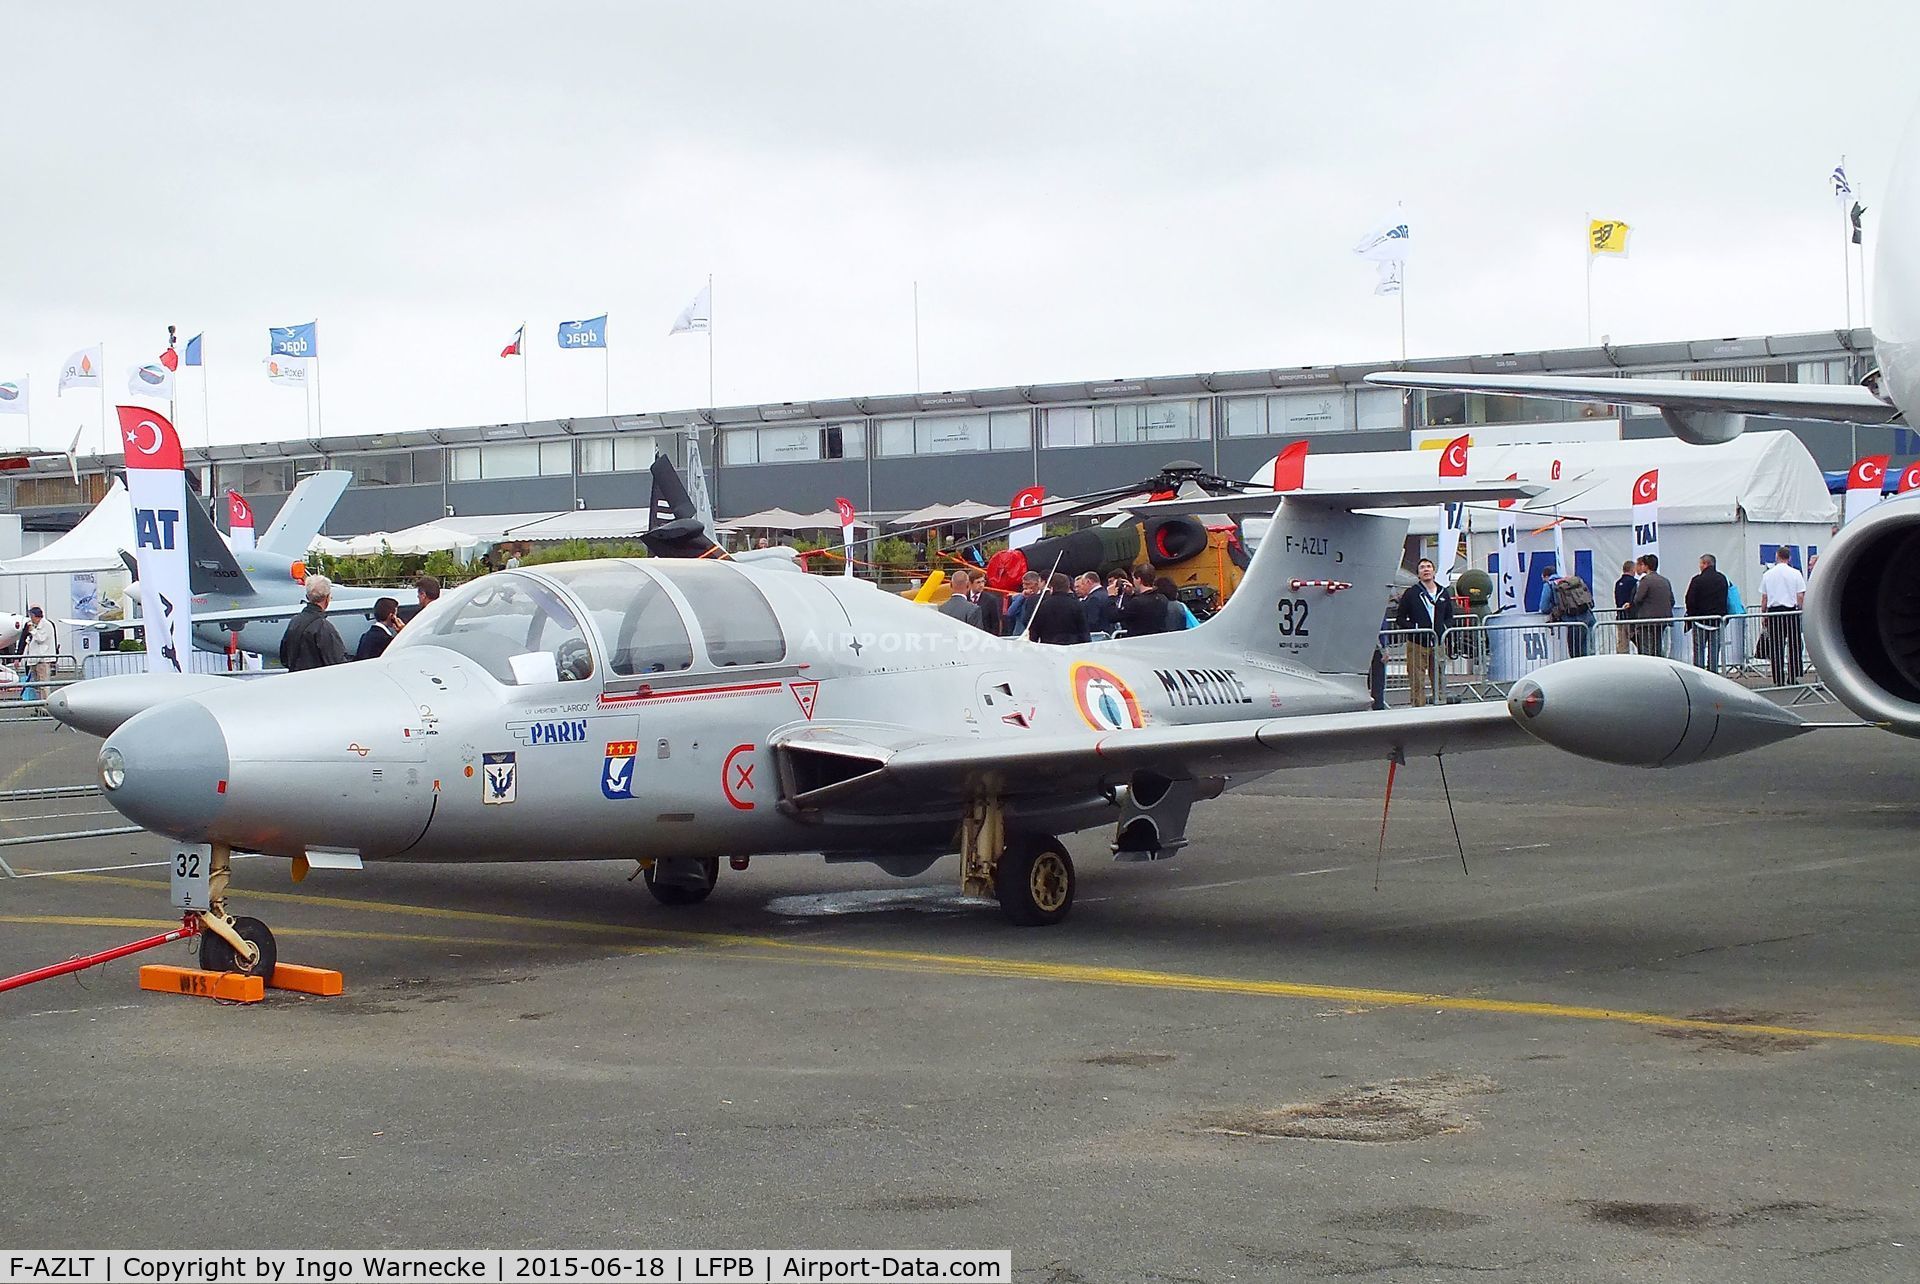 F-AZLT, Morane-Saulnier MS.760 Paris I C/N 32, Morane-Saulnier MS.760A Paris at the Aerosalon 2015, Paris